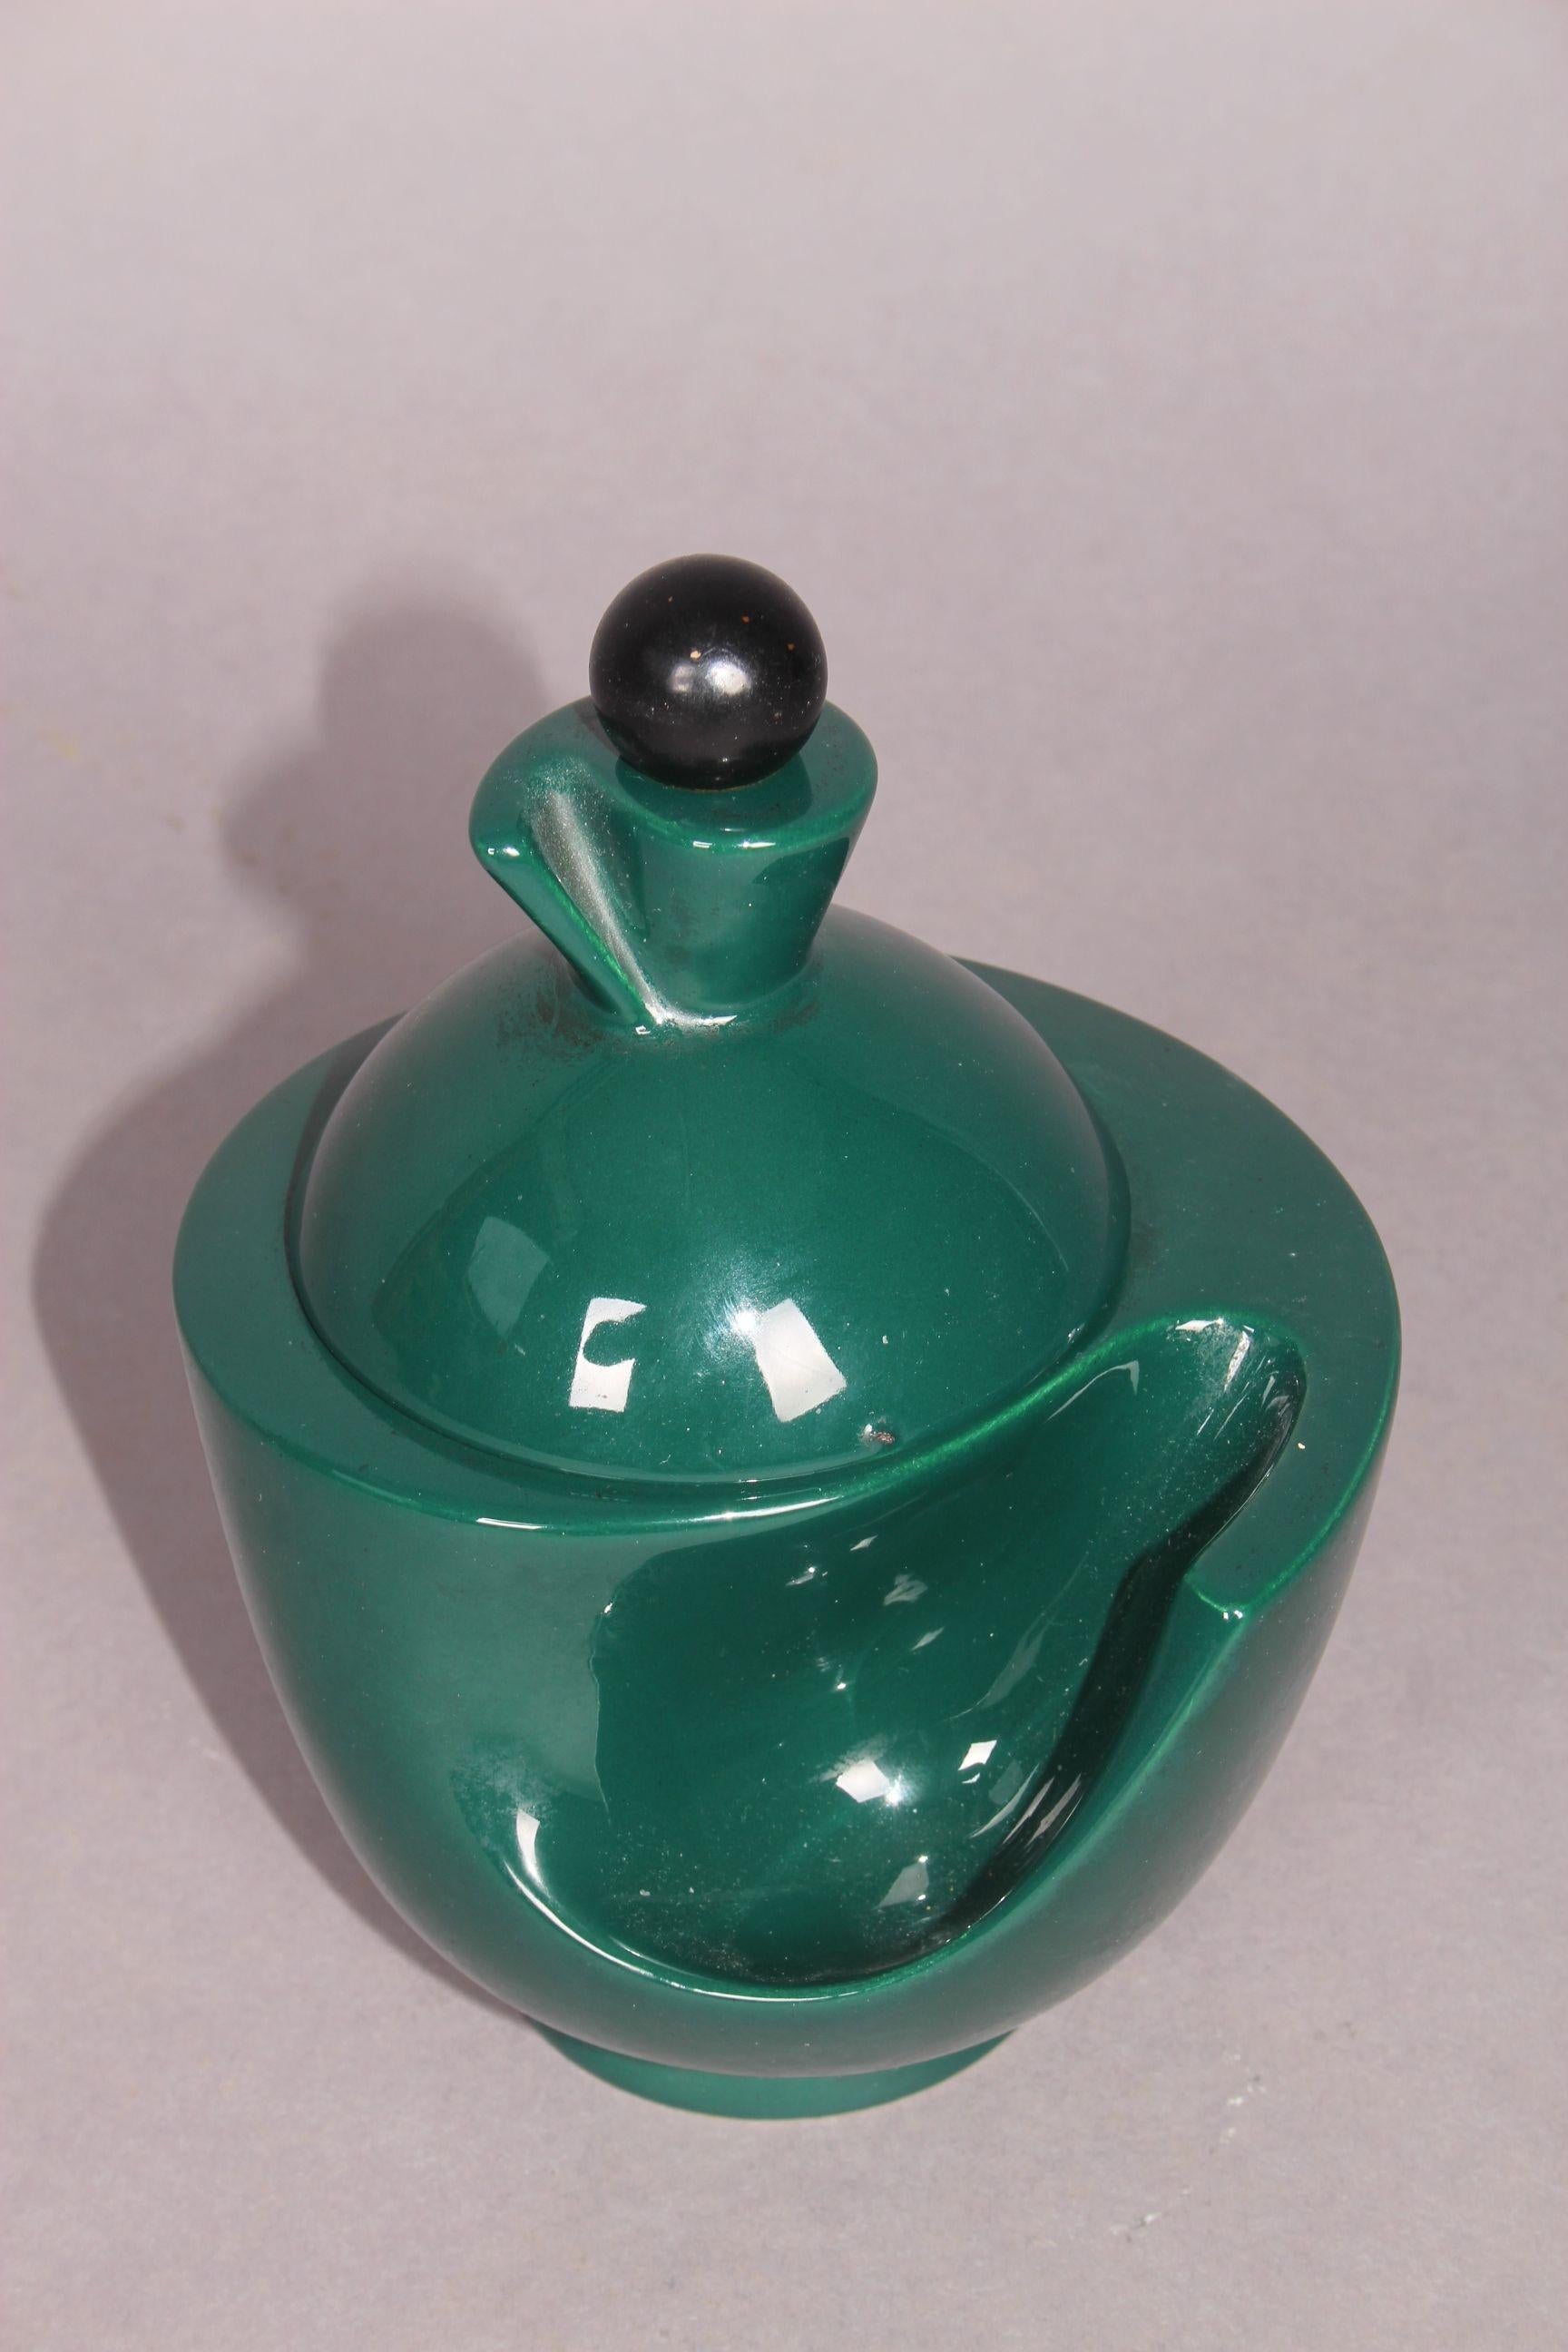 Ceramic French Art Deco Sugar Bowl